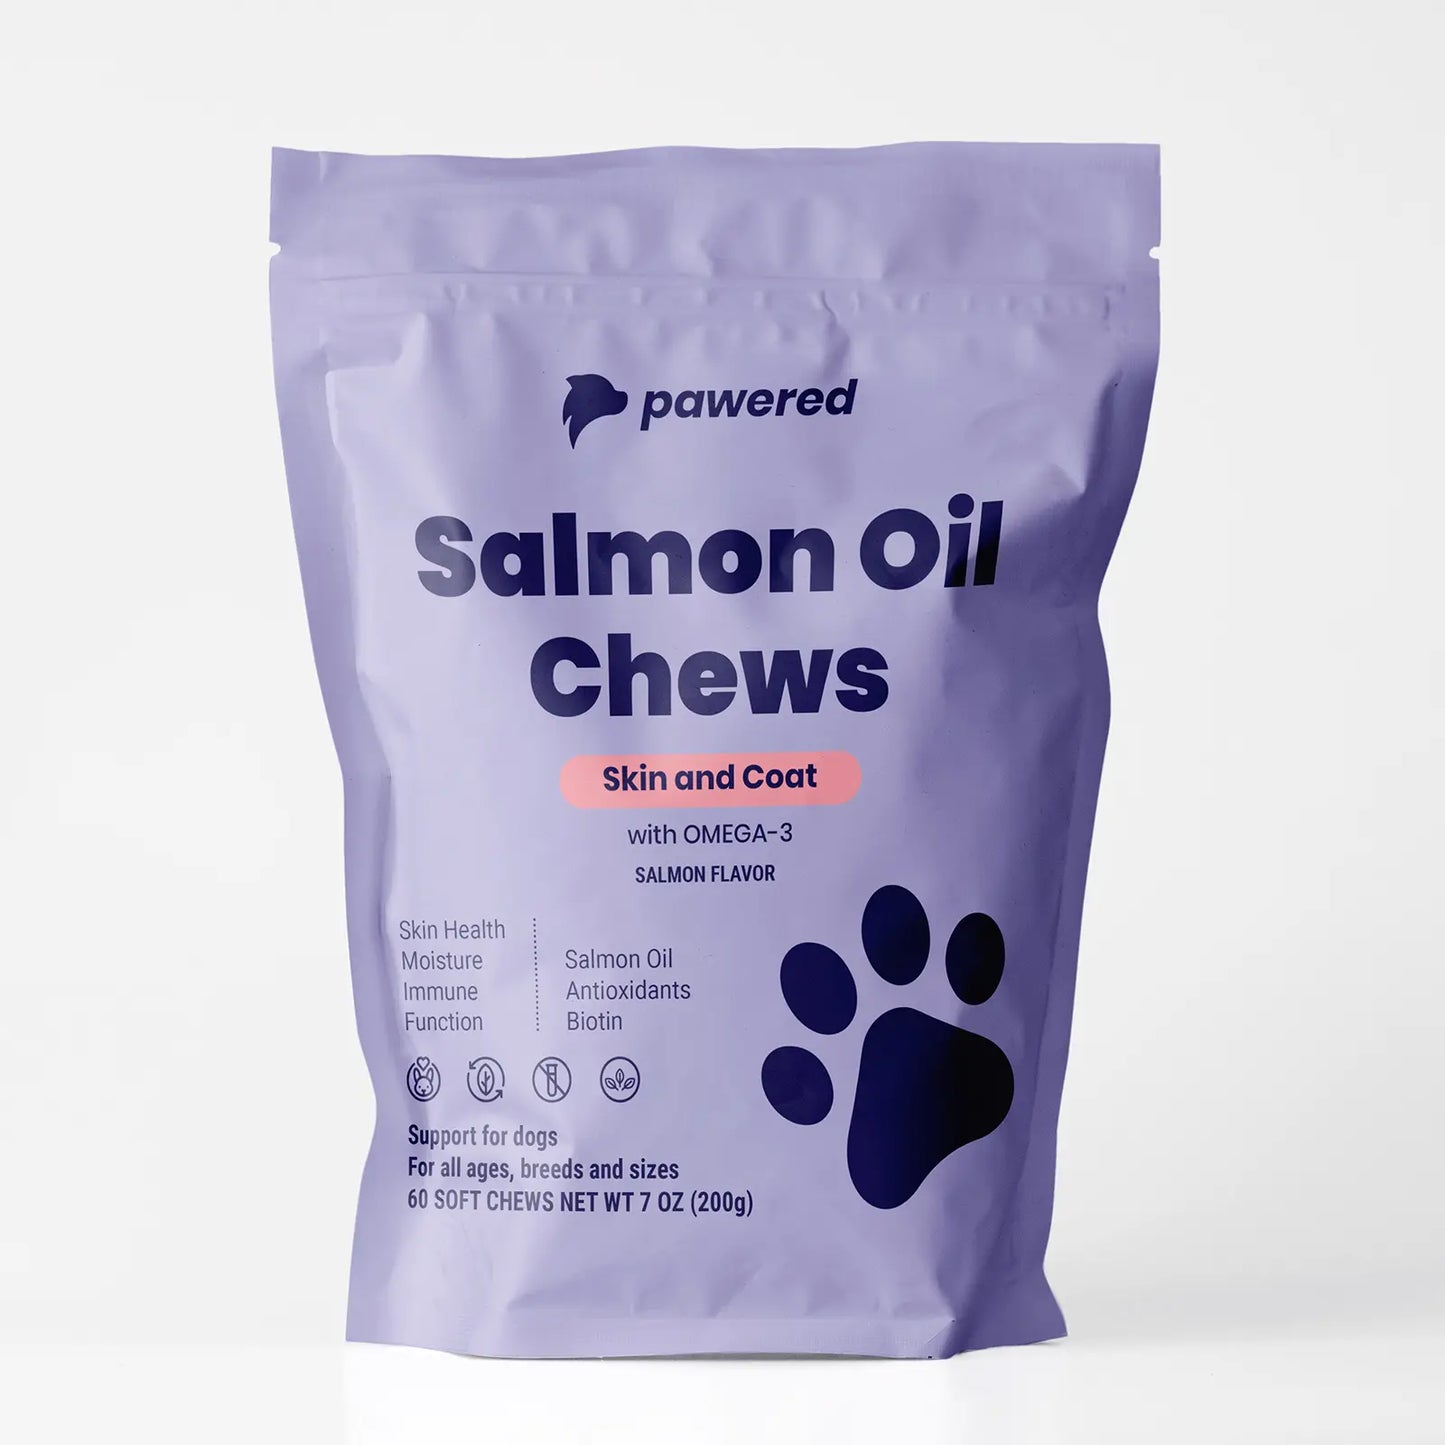 salmon oil for dogs, Omega 3, reduce dandruff, healthy skin, healthy coat, coat strength